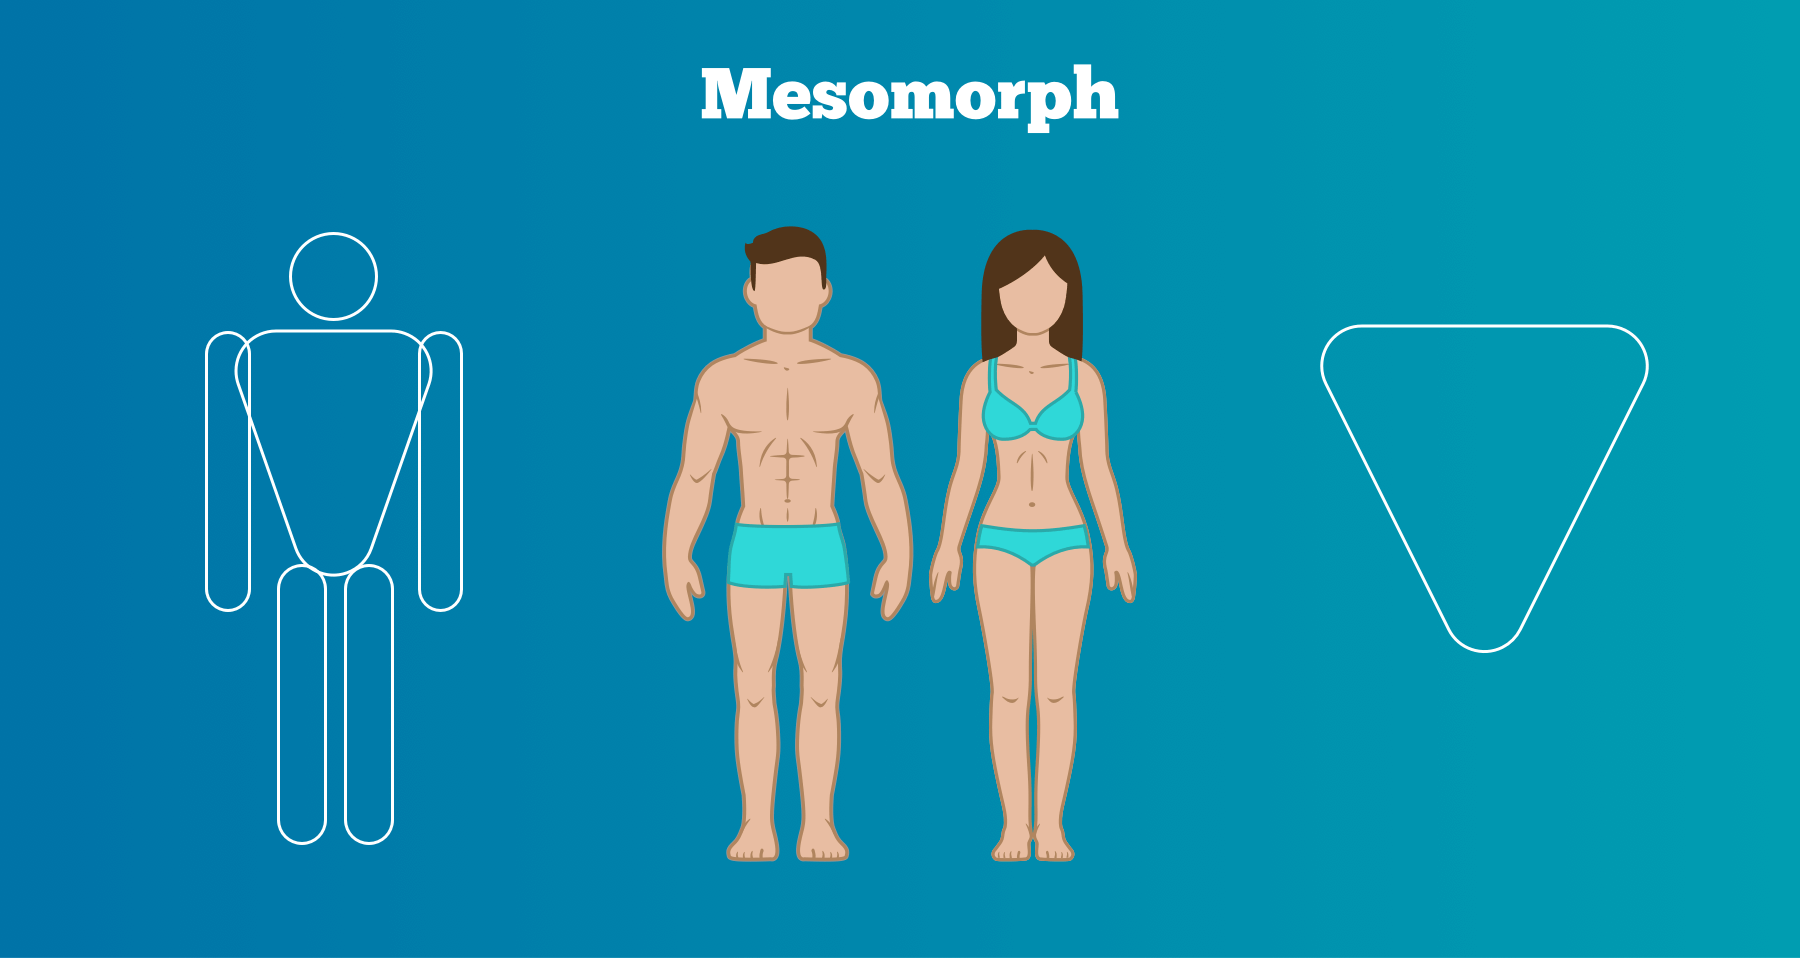 mesomorph body type